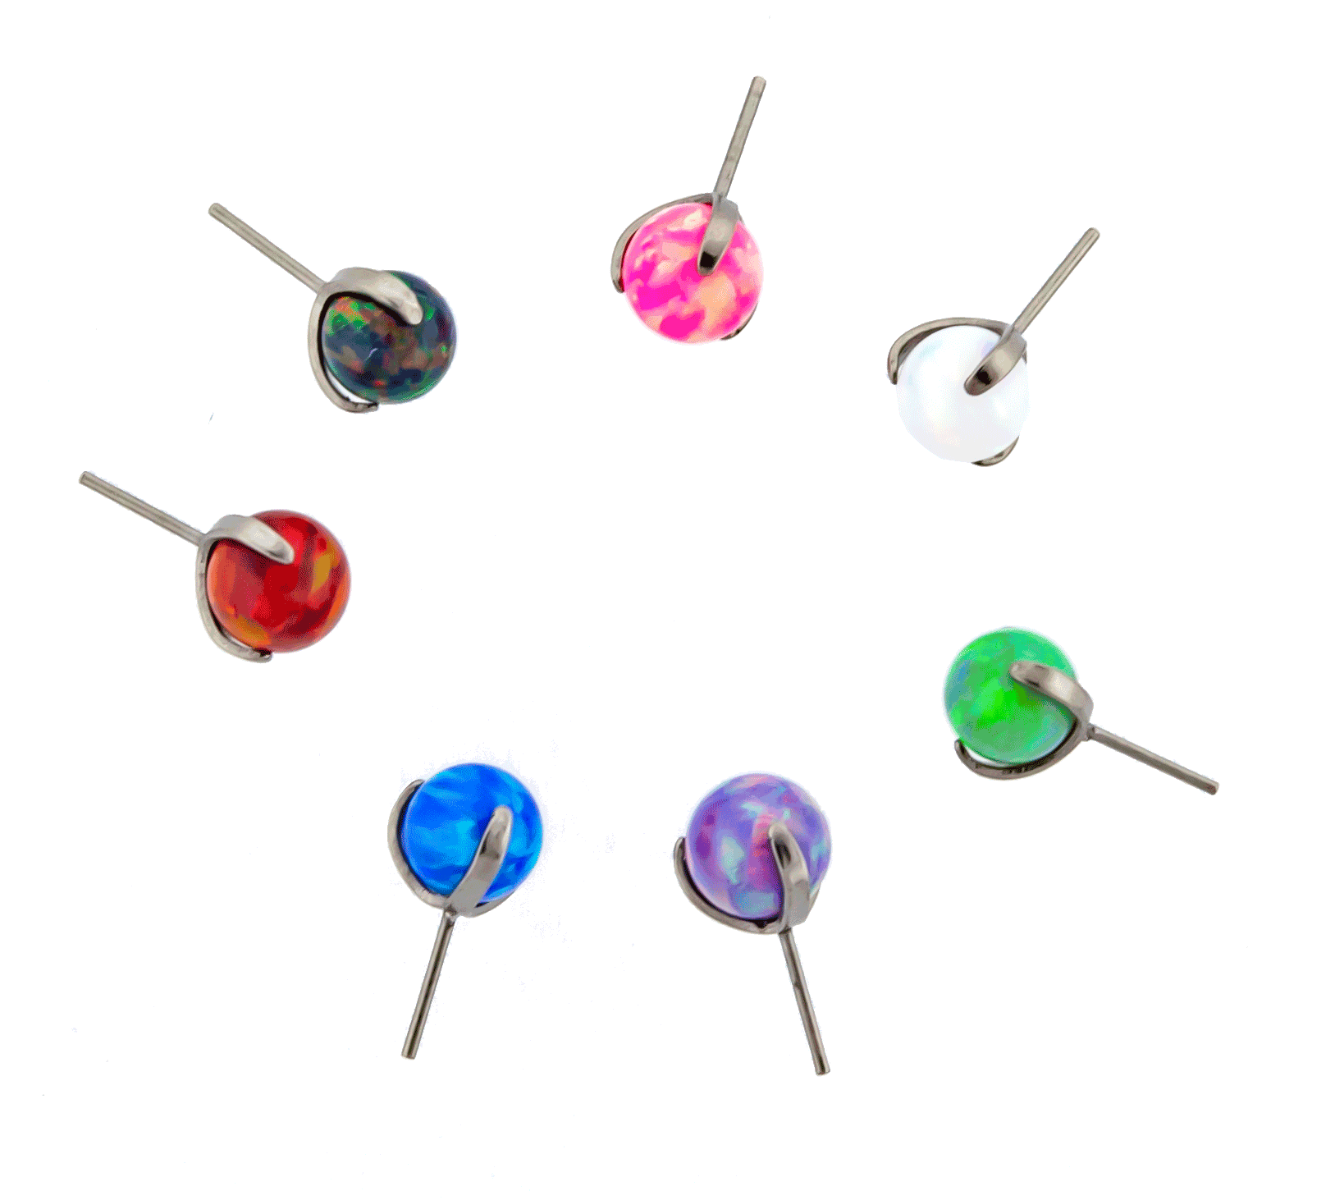 Body Jewelry Parts Titanium Threadless Claw Set Opal Balls - 1 Piece -Rebel Bod-RebelBod